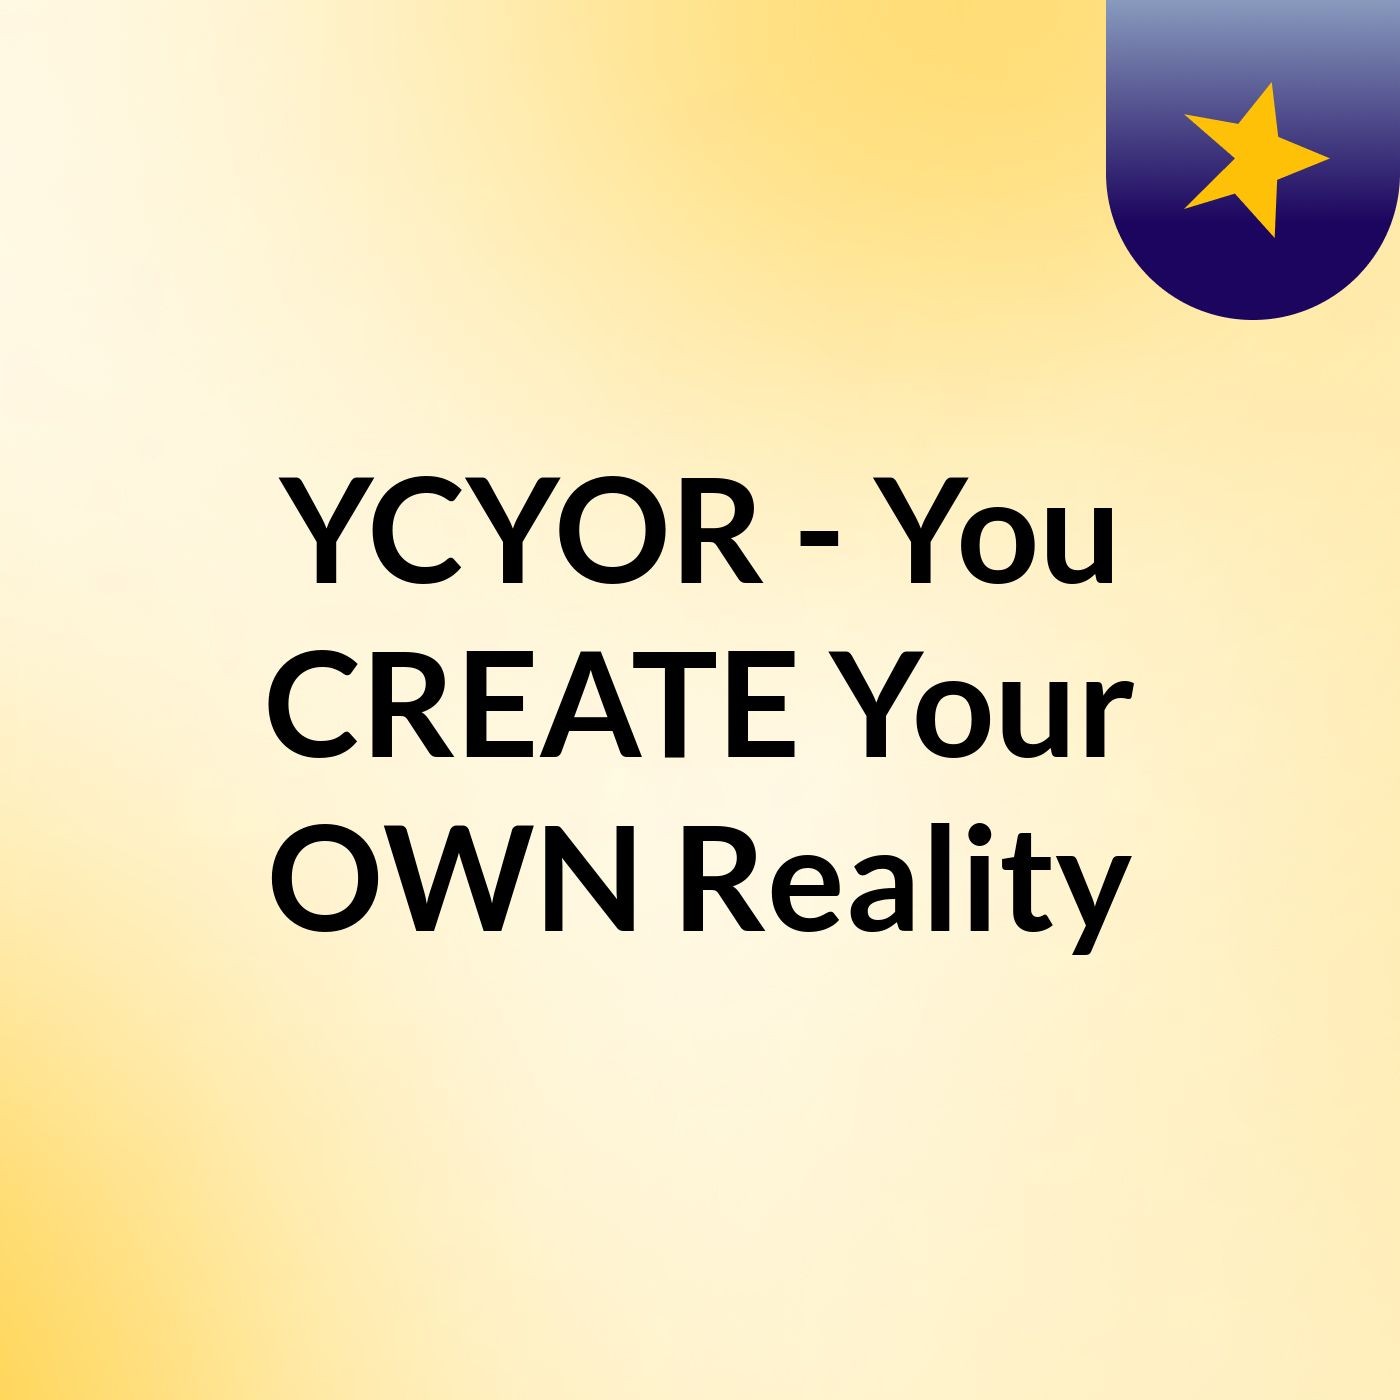 YCYOR - You CREATE Your OWN Reality